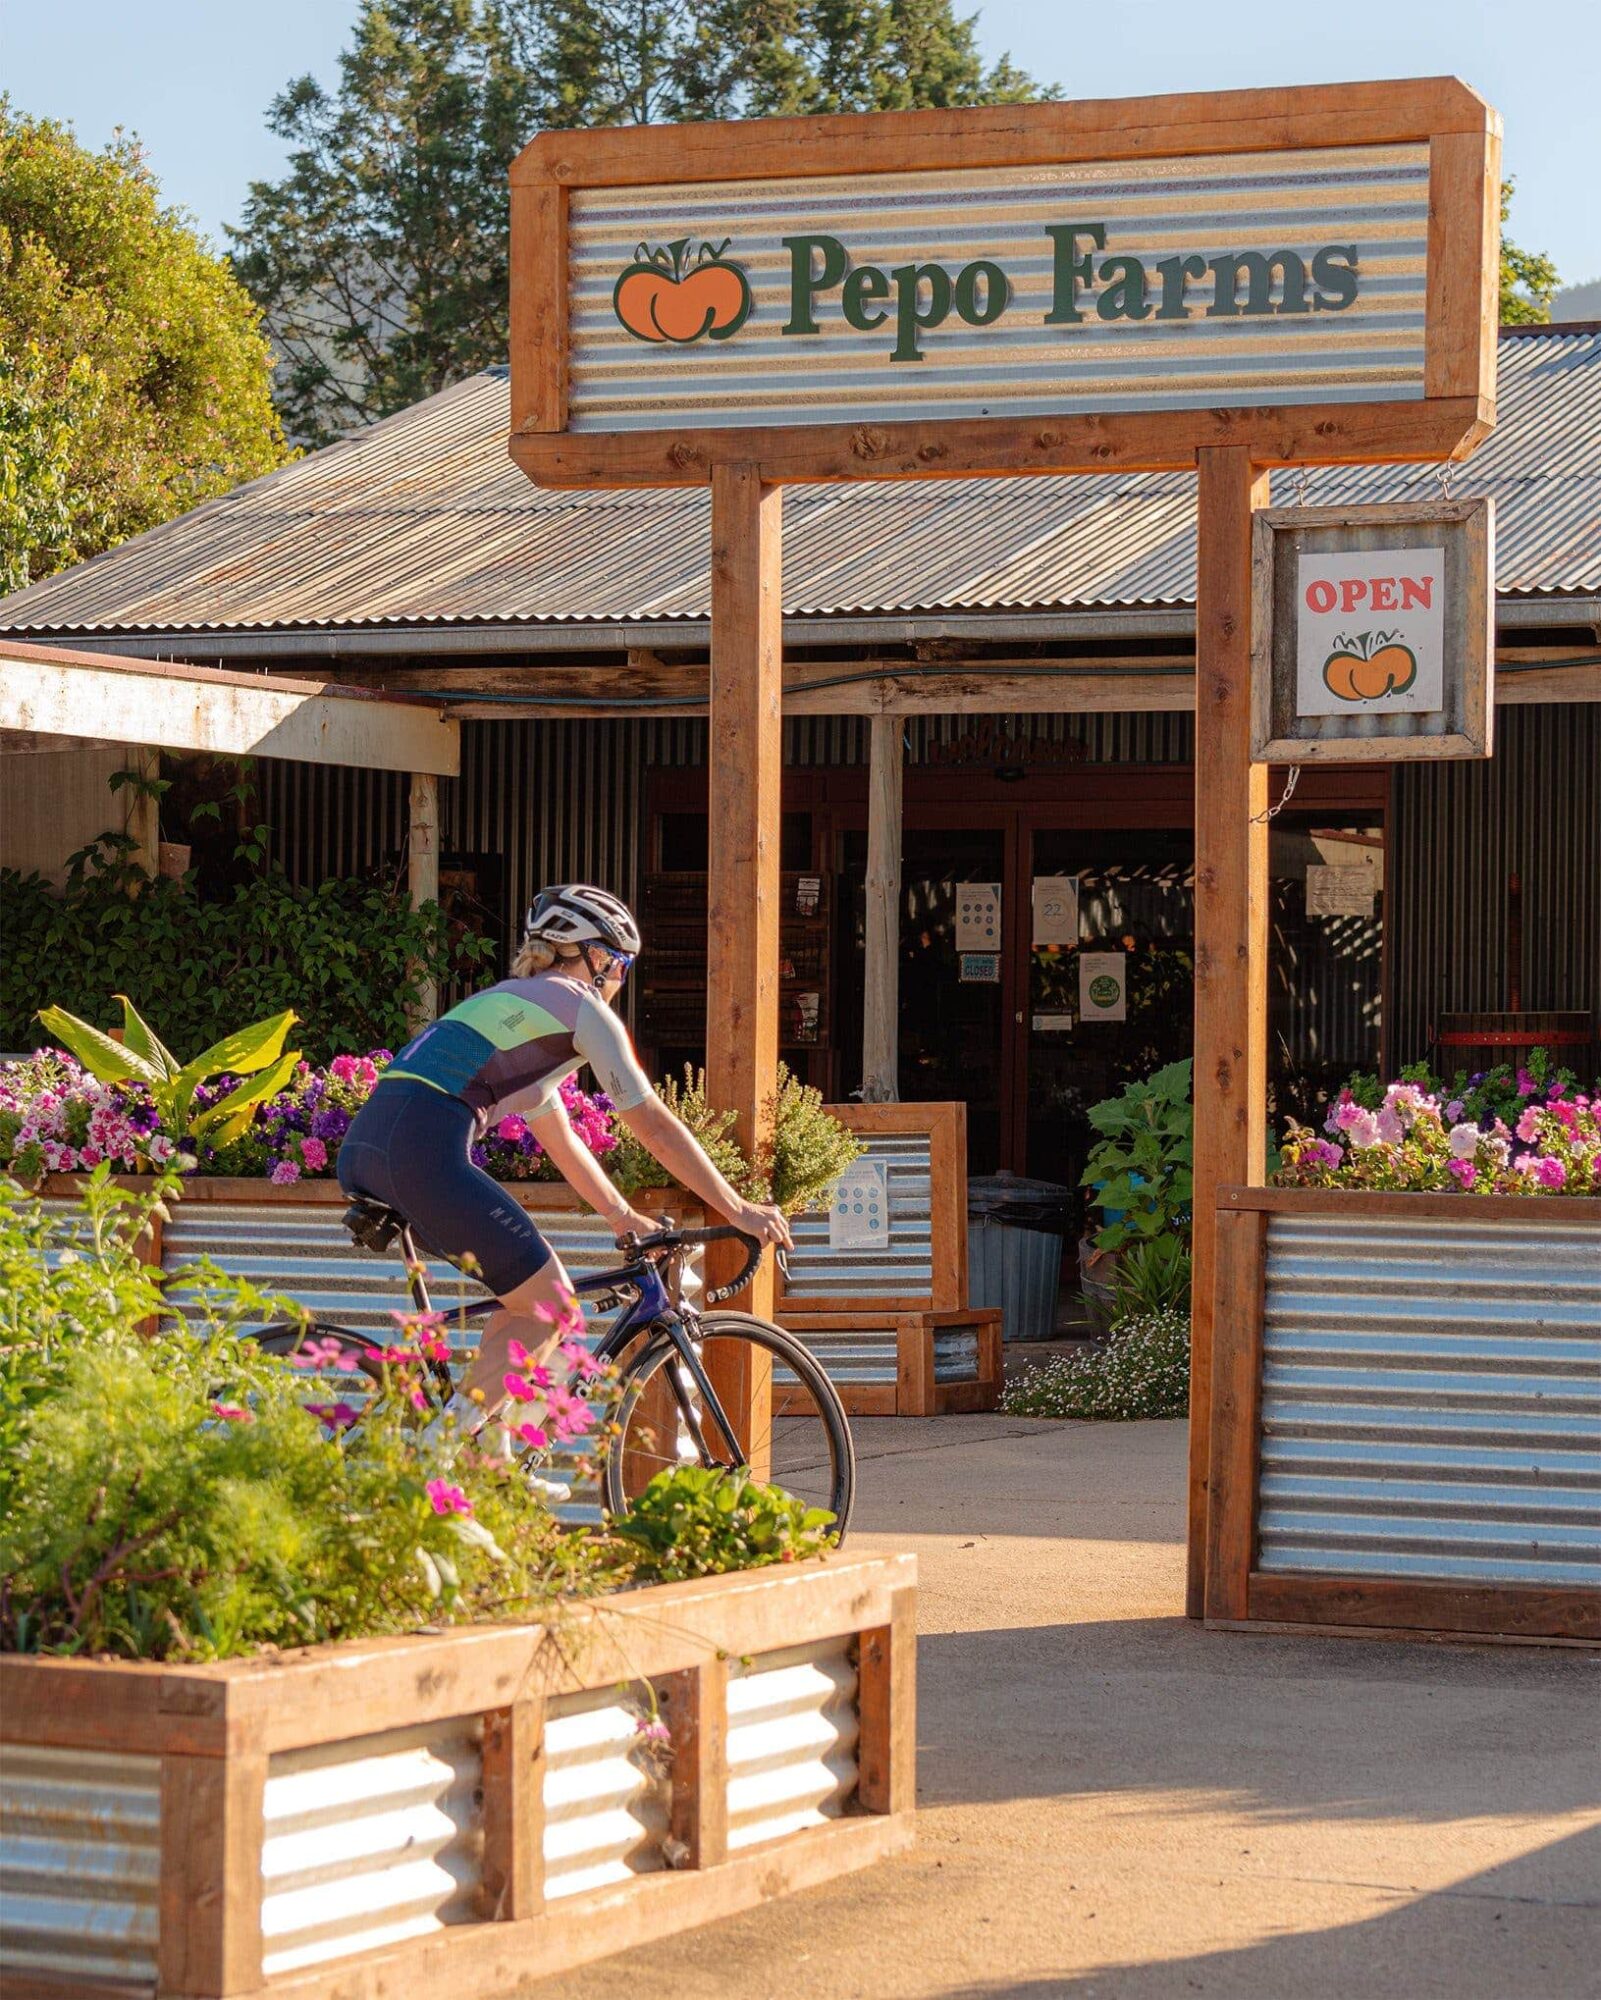 Pepo Farms